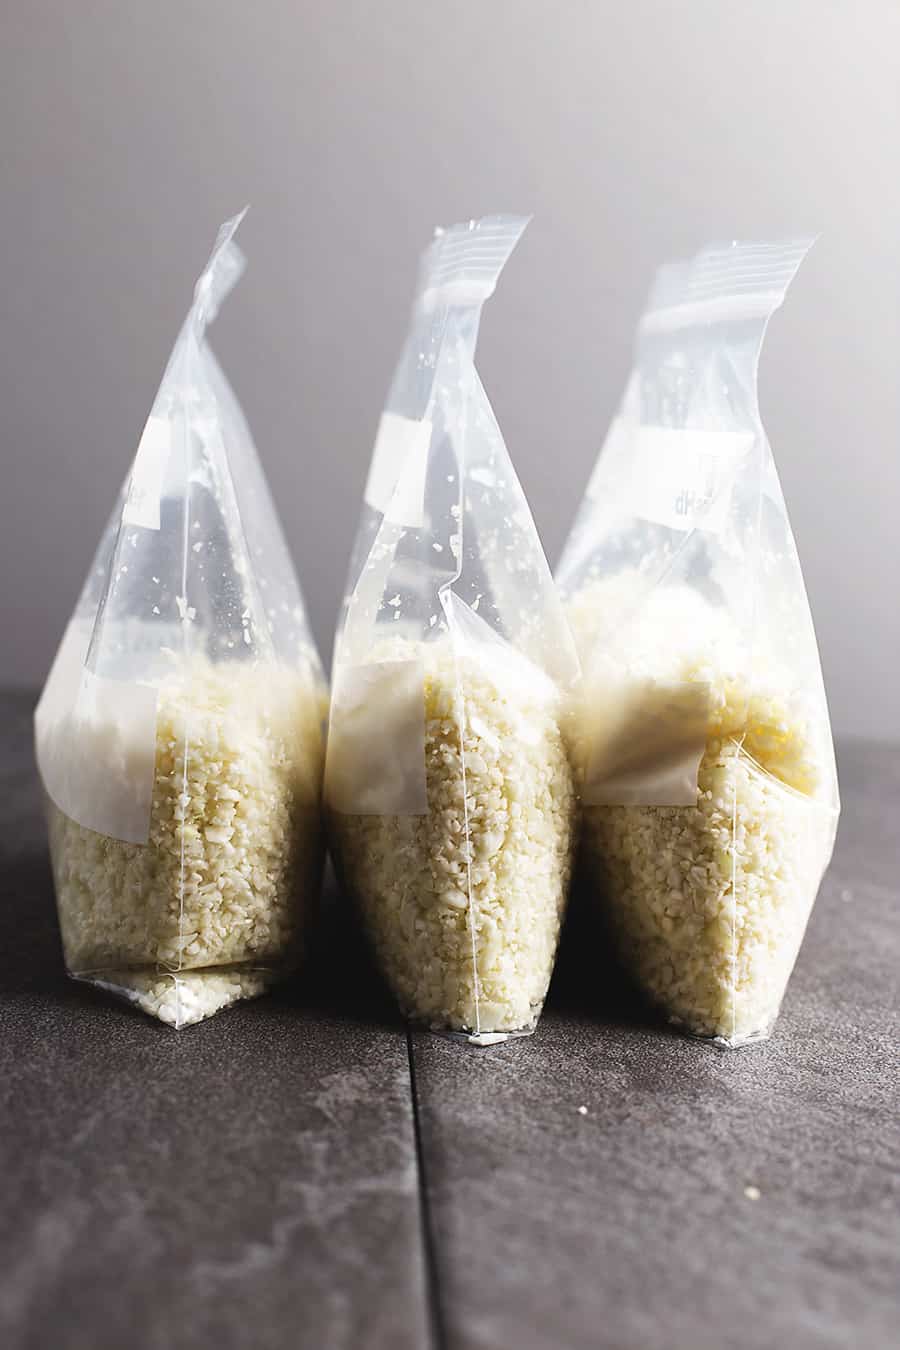 cauliflower rice in freezer bags